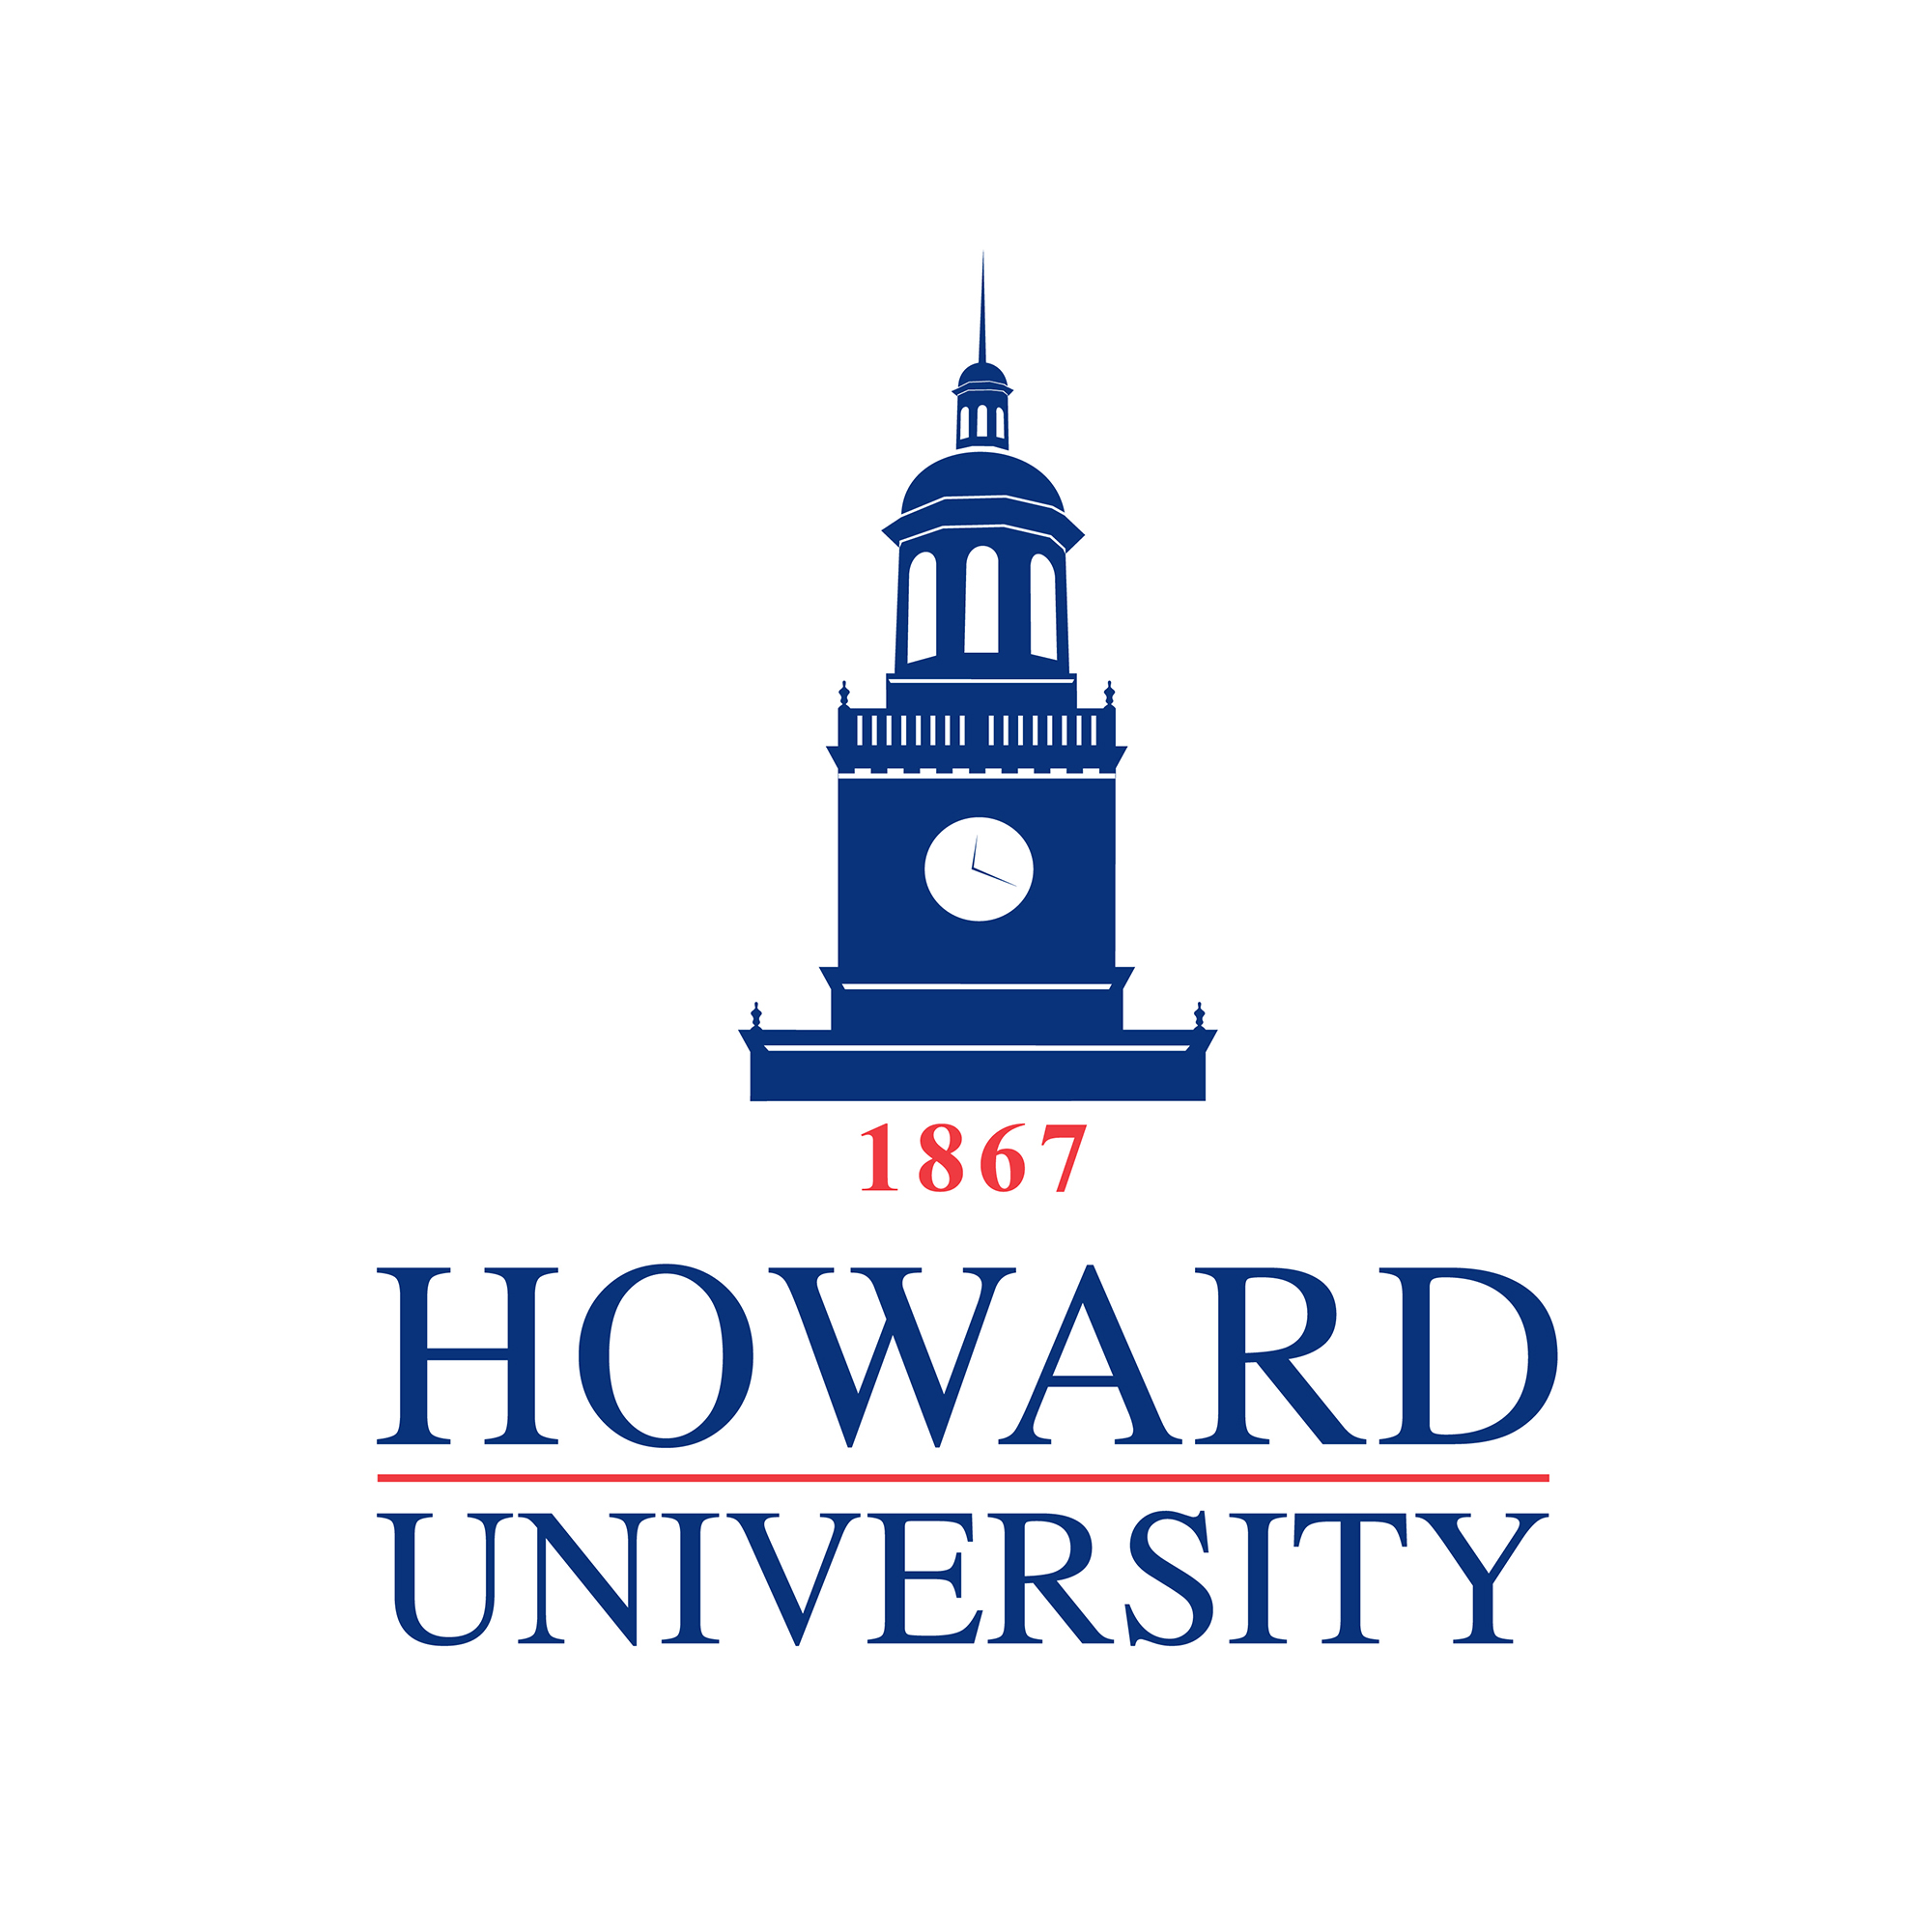 EOAD-Clients-Howard University.jpg